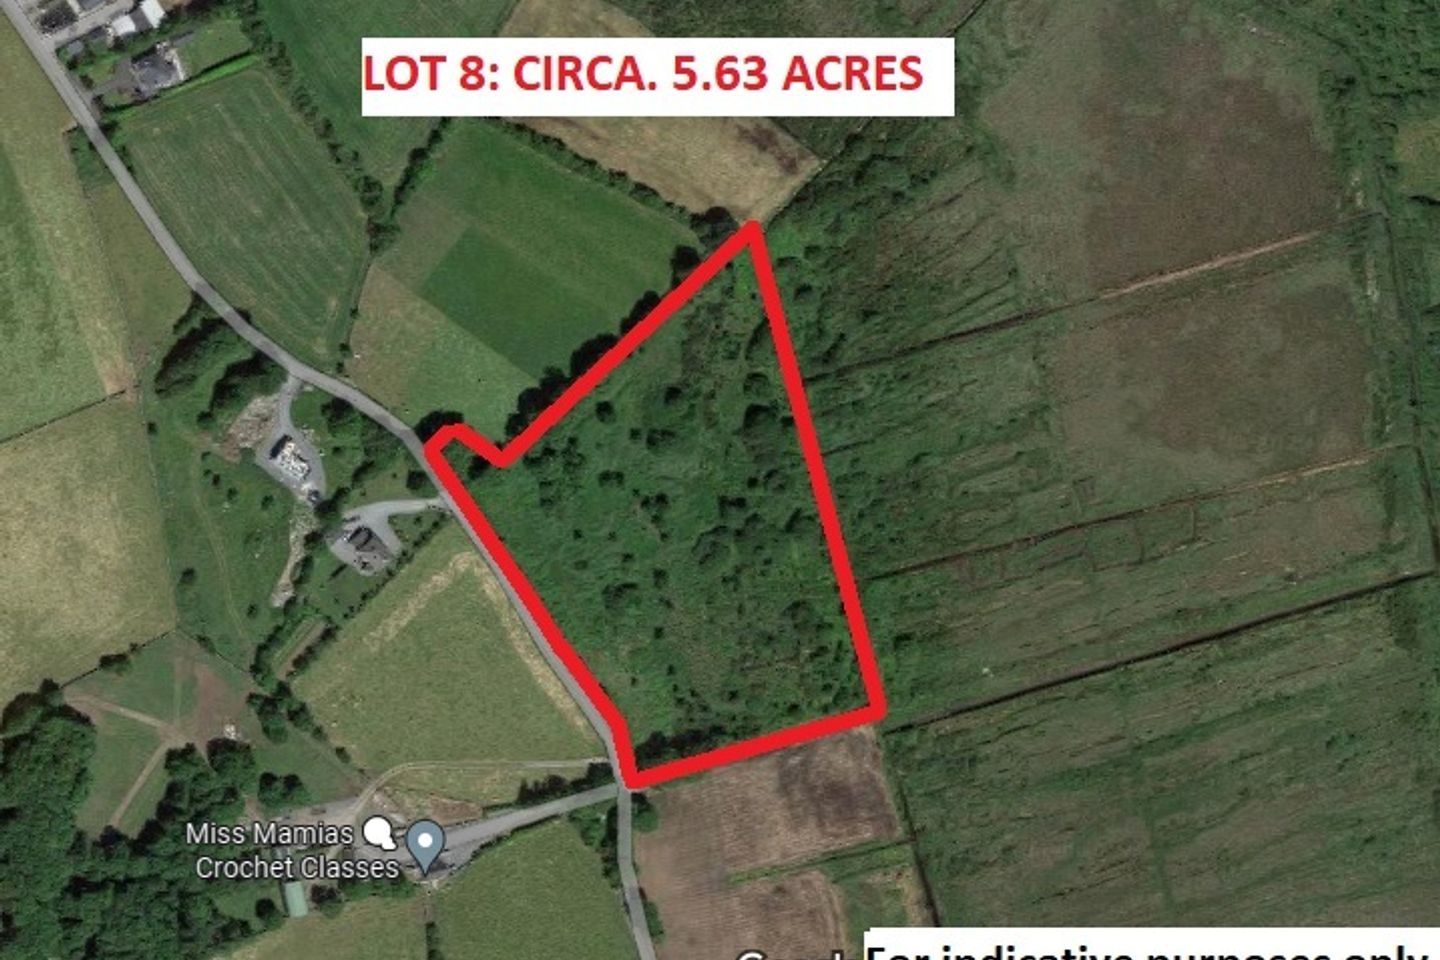 Lot 8 - circa 5.63 acres at Mace, Corrandulla, Co. Galway